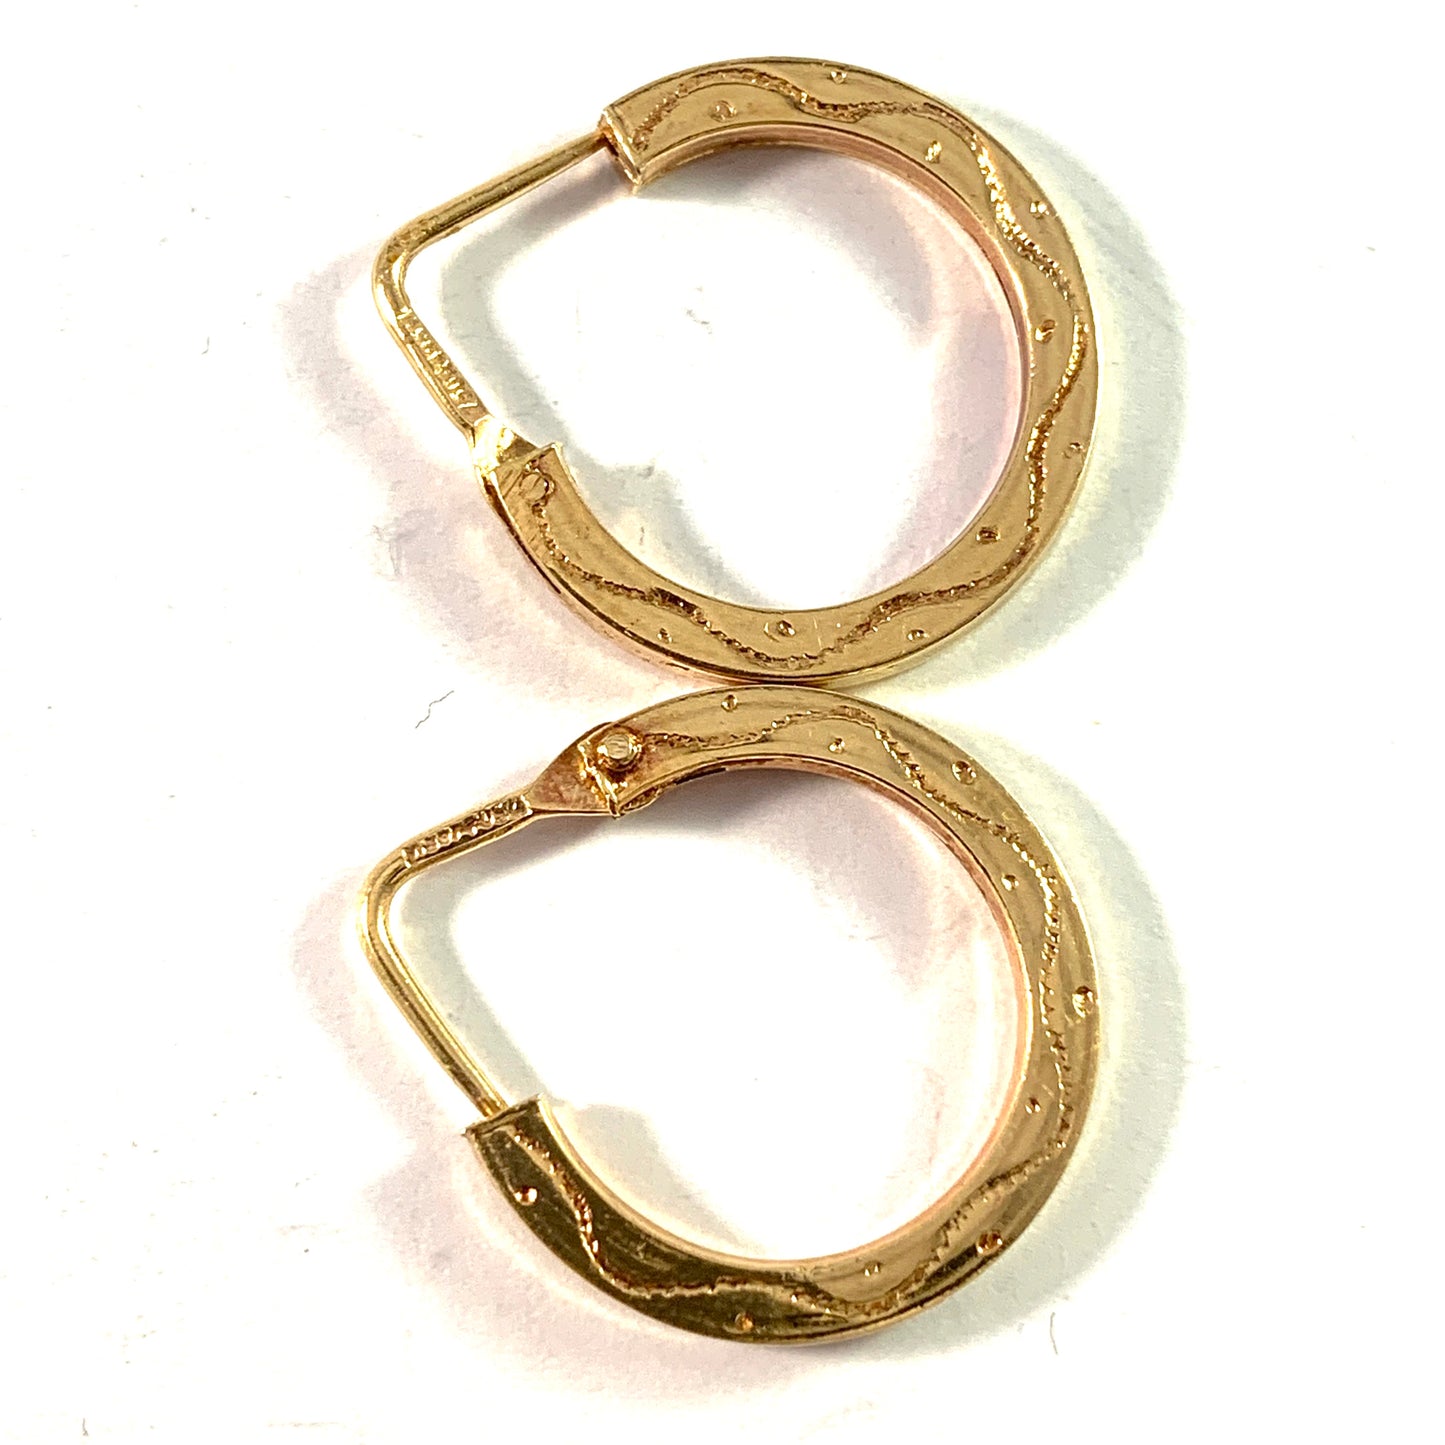 COSTA & ROZZANO, Italy 1970s. 18k Gold Earrings.